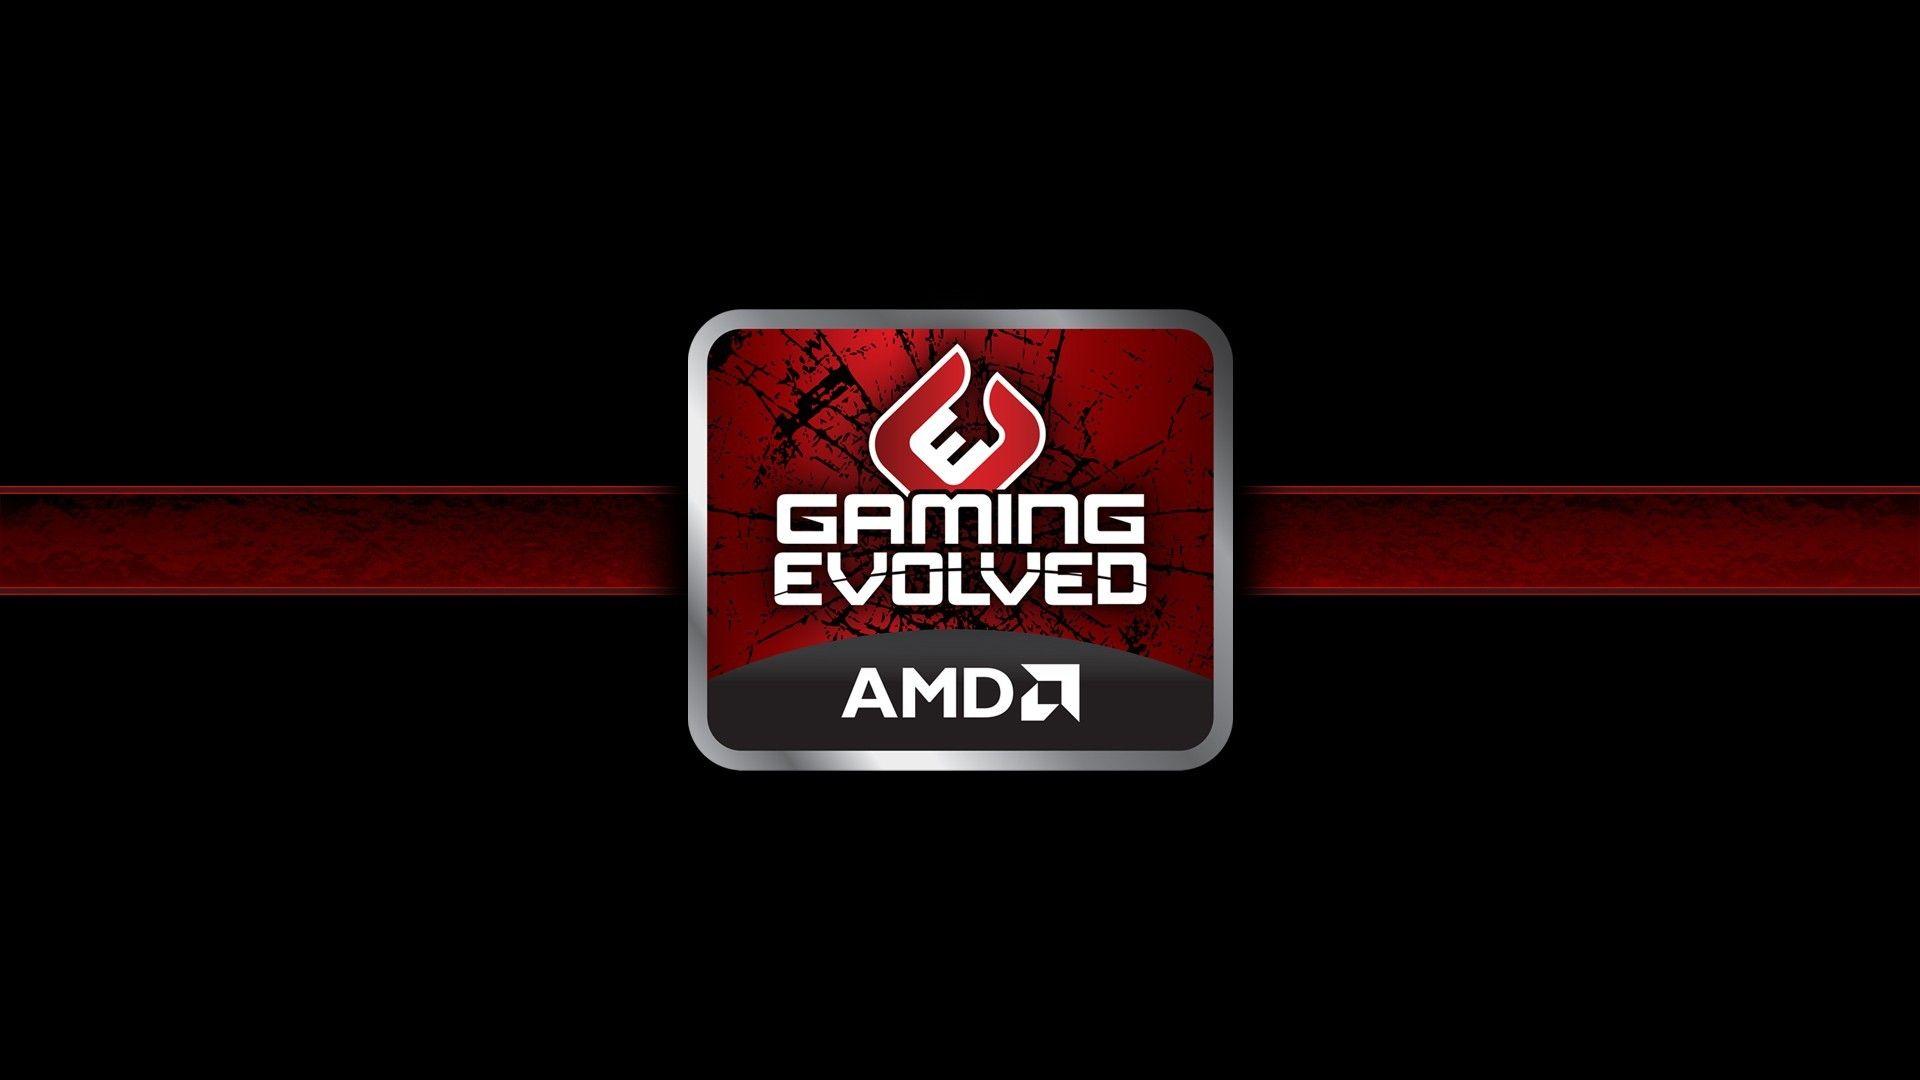 AMD 4K Logo - 76+ Amd 4K Wallpapers on WallpaperPlay